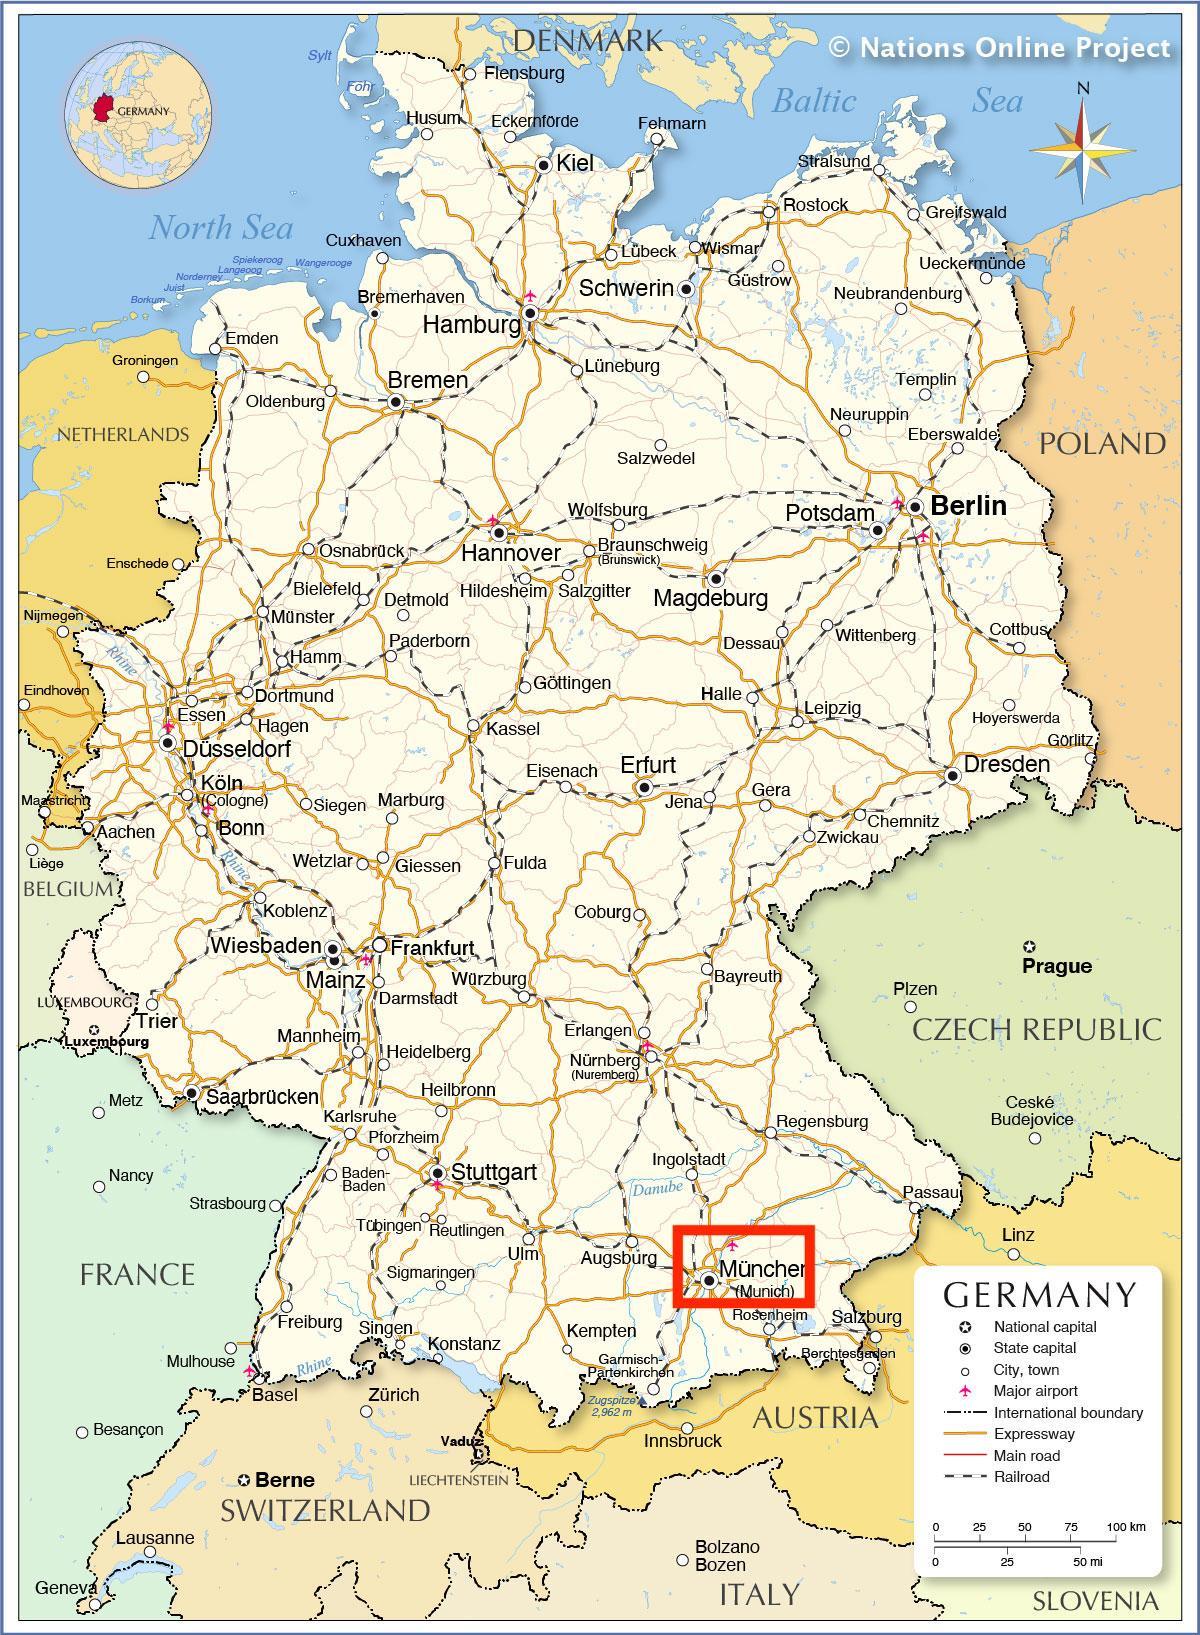 Munich on Bavaria - Germany map